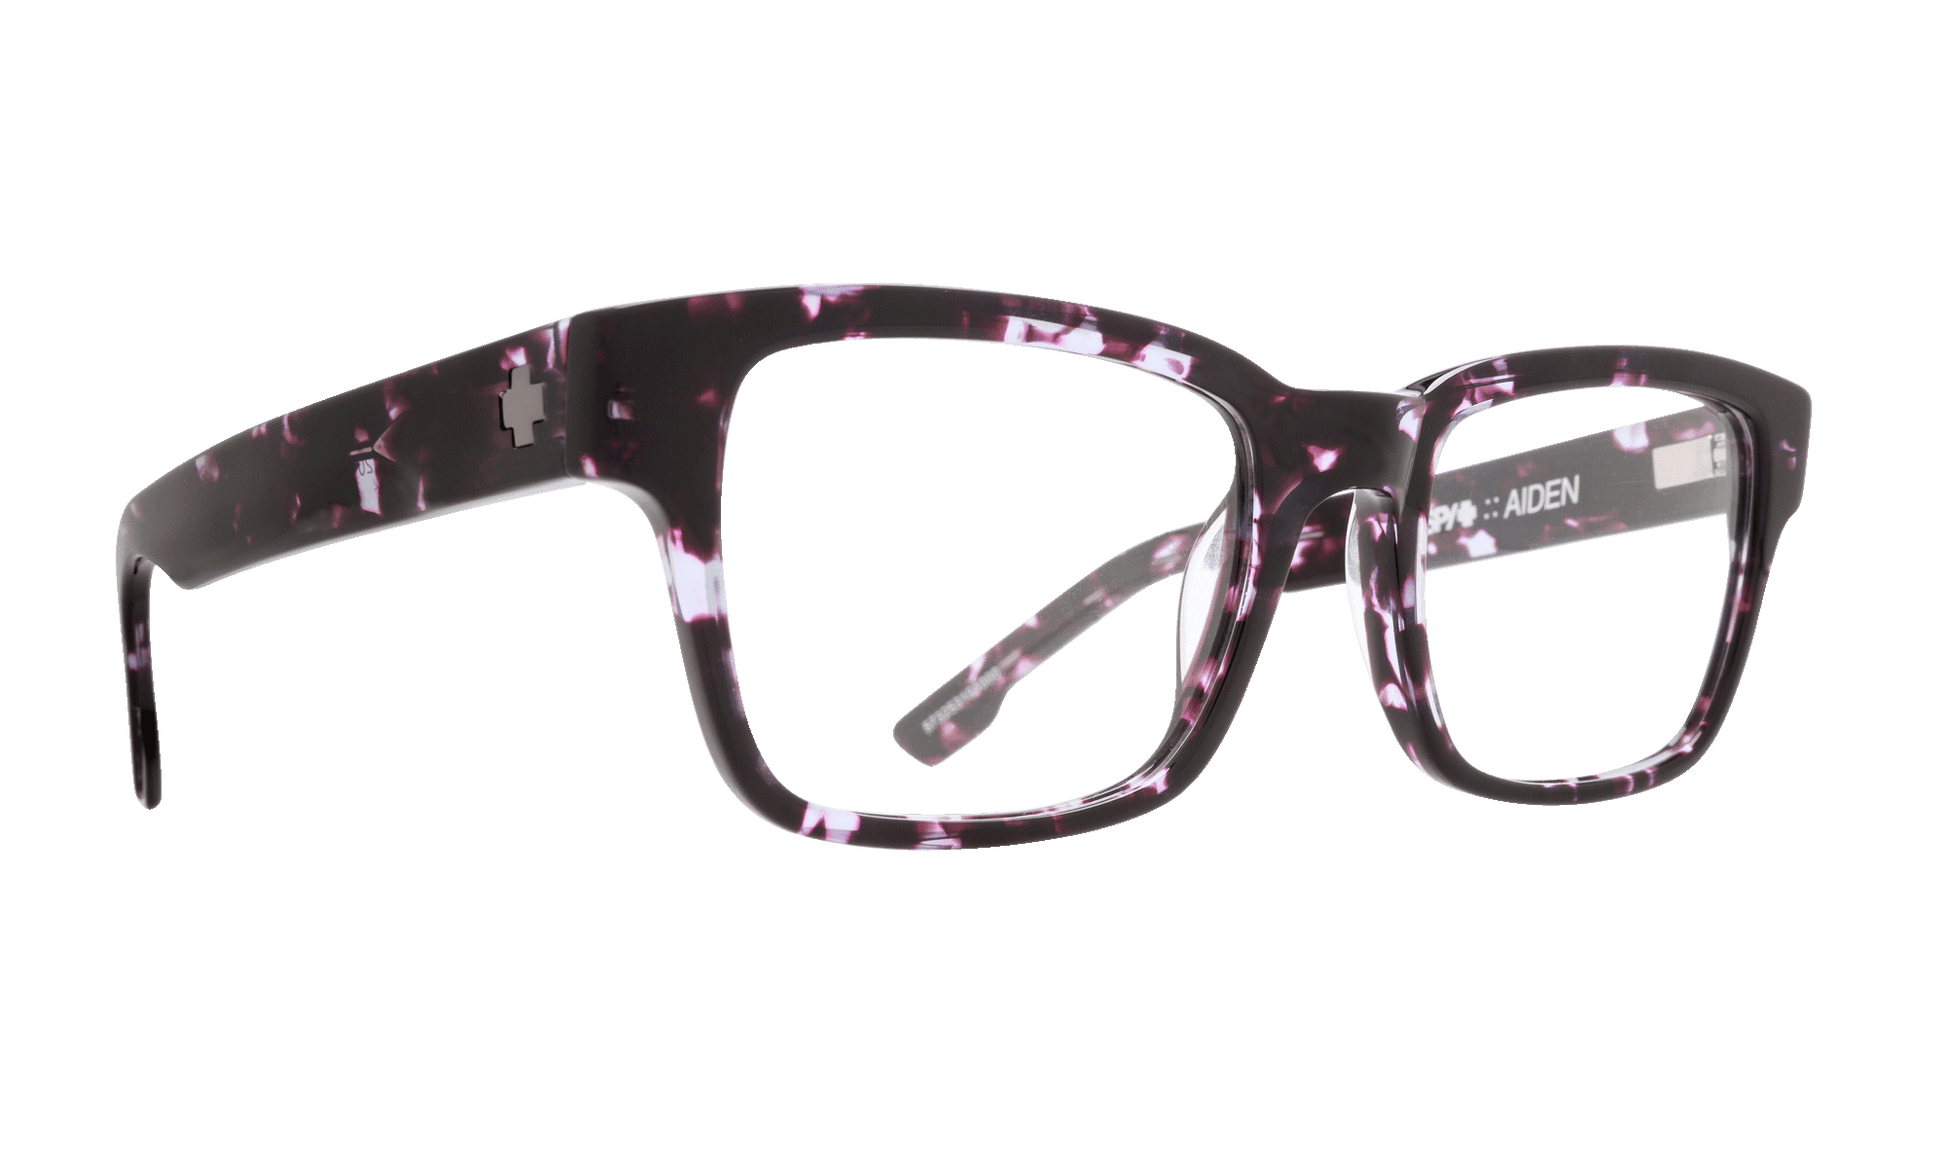 SPY AIDEN Eyeglasses   Plum Camo Tort  a clean 53-20-145